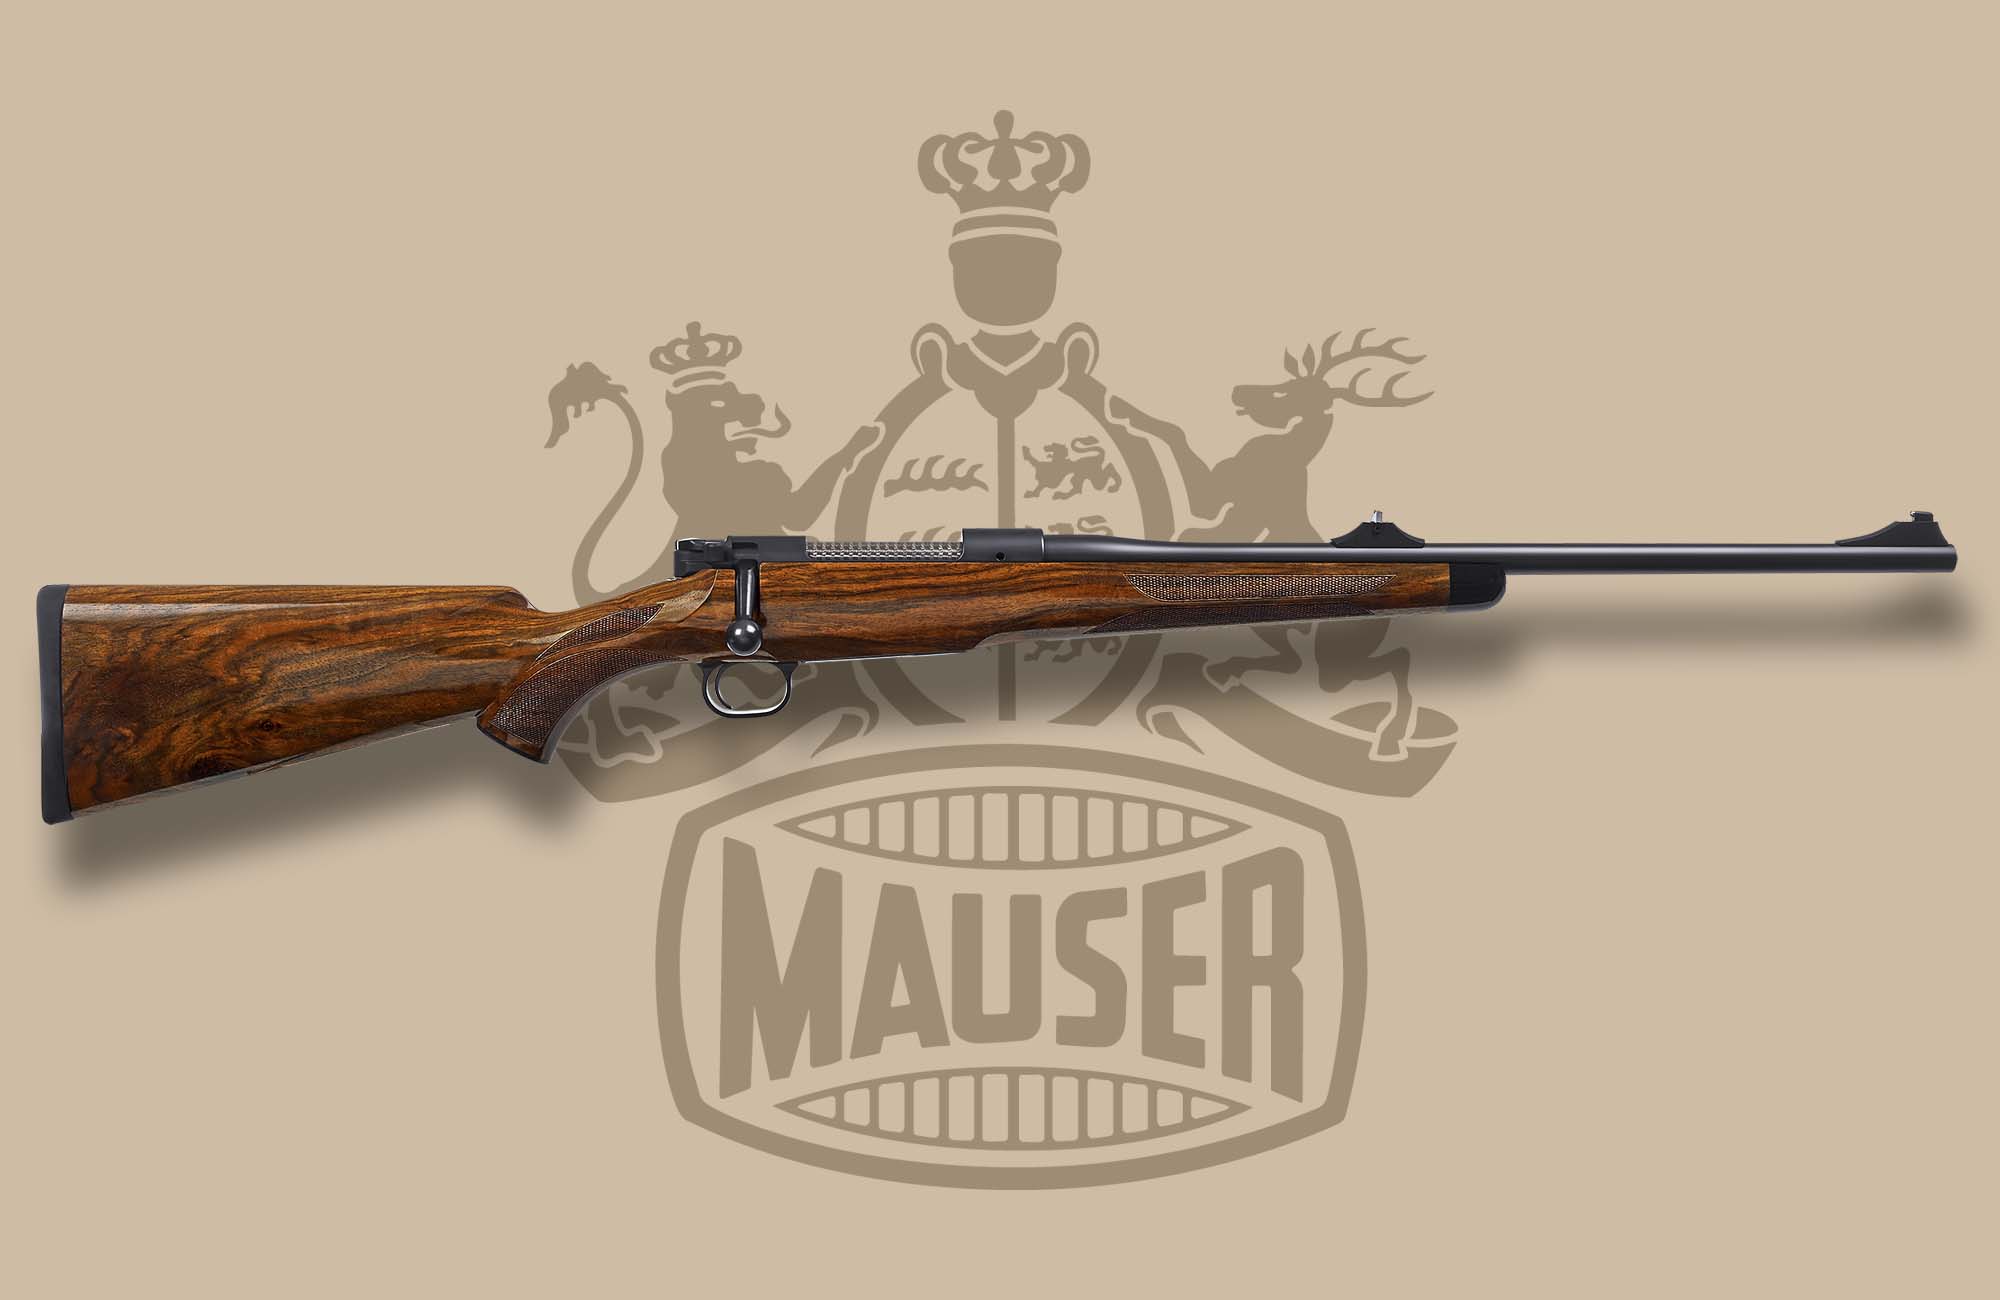 Mauser Logo - Mauser M12 S Manual Cocking system rifle | GUNSweek.com